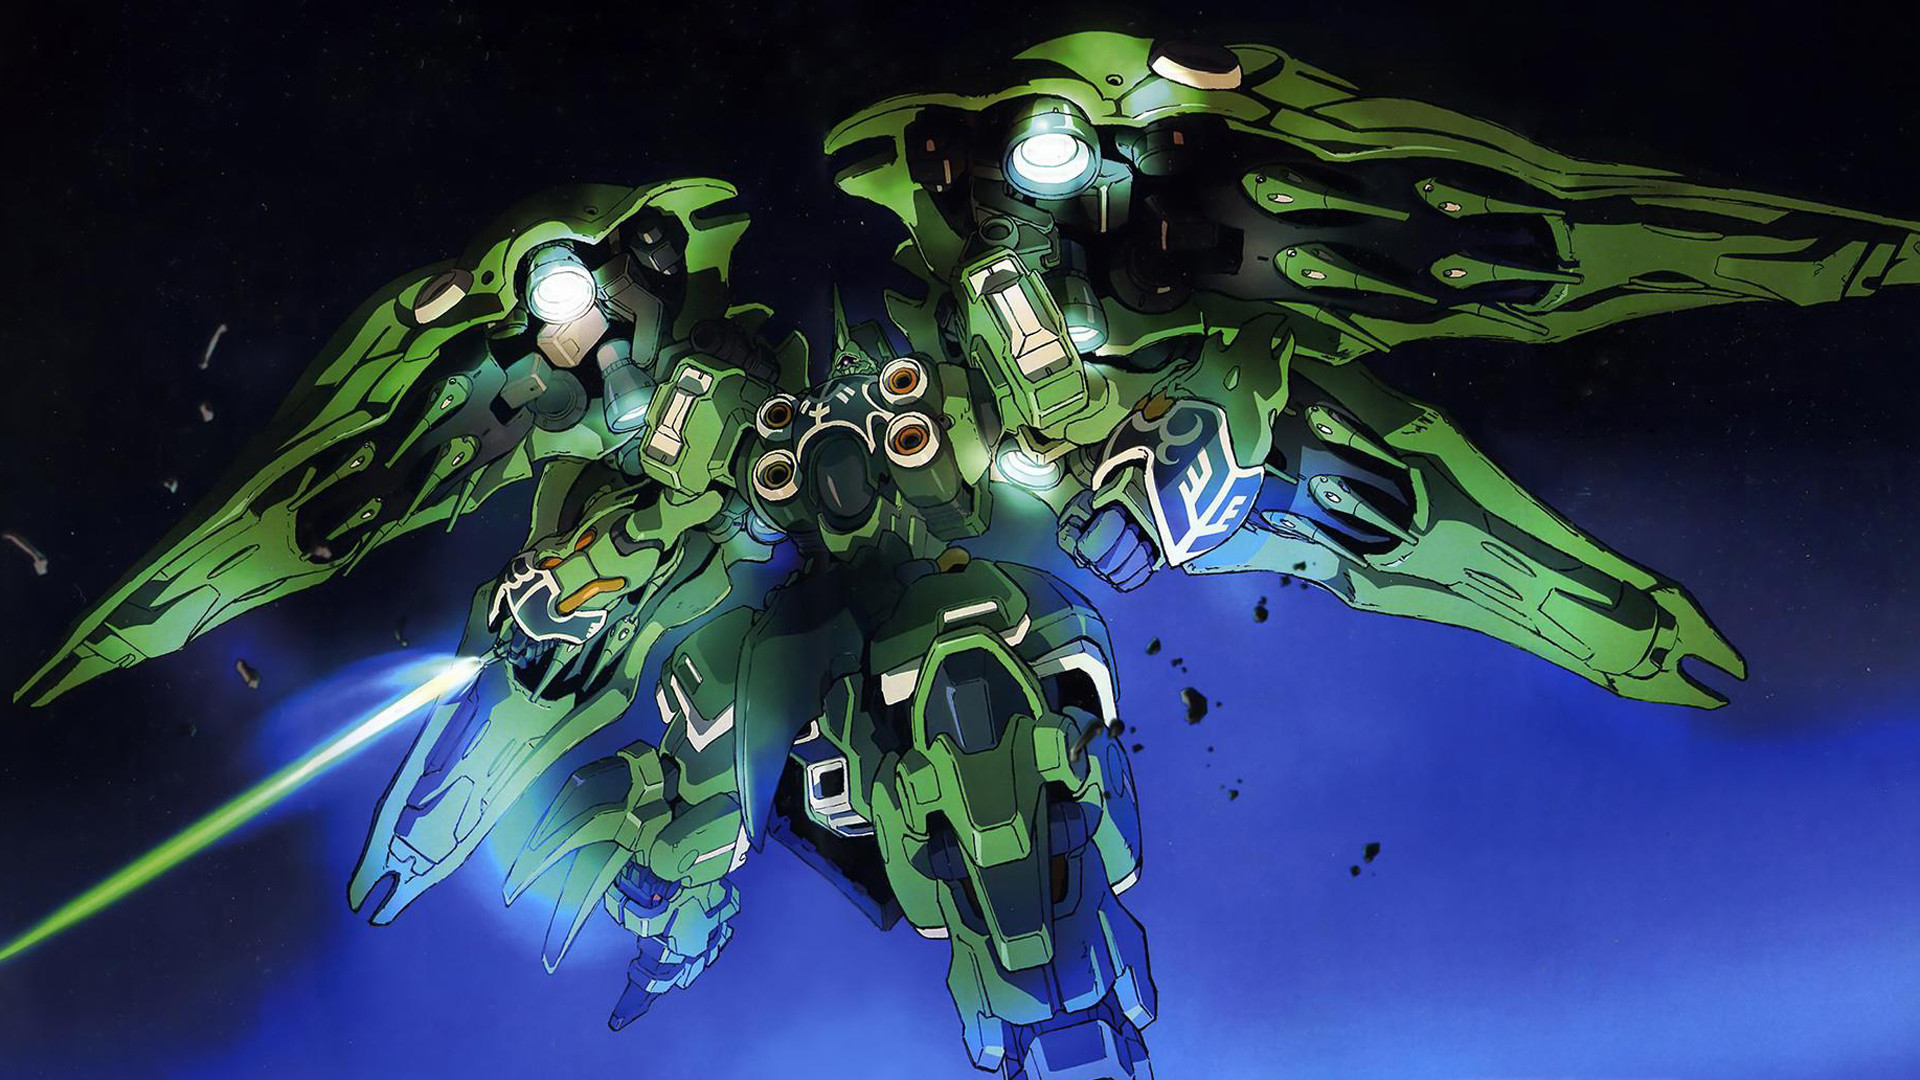 1920x1080 Anime Gundam Wallpaper/Background 1920 x 1080 - Id: 226524 - Wallpaper Abyss